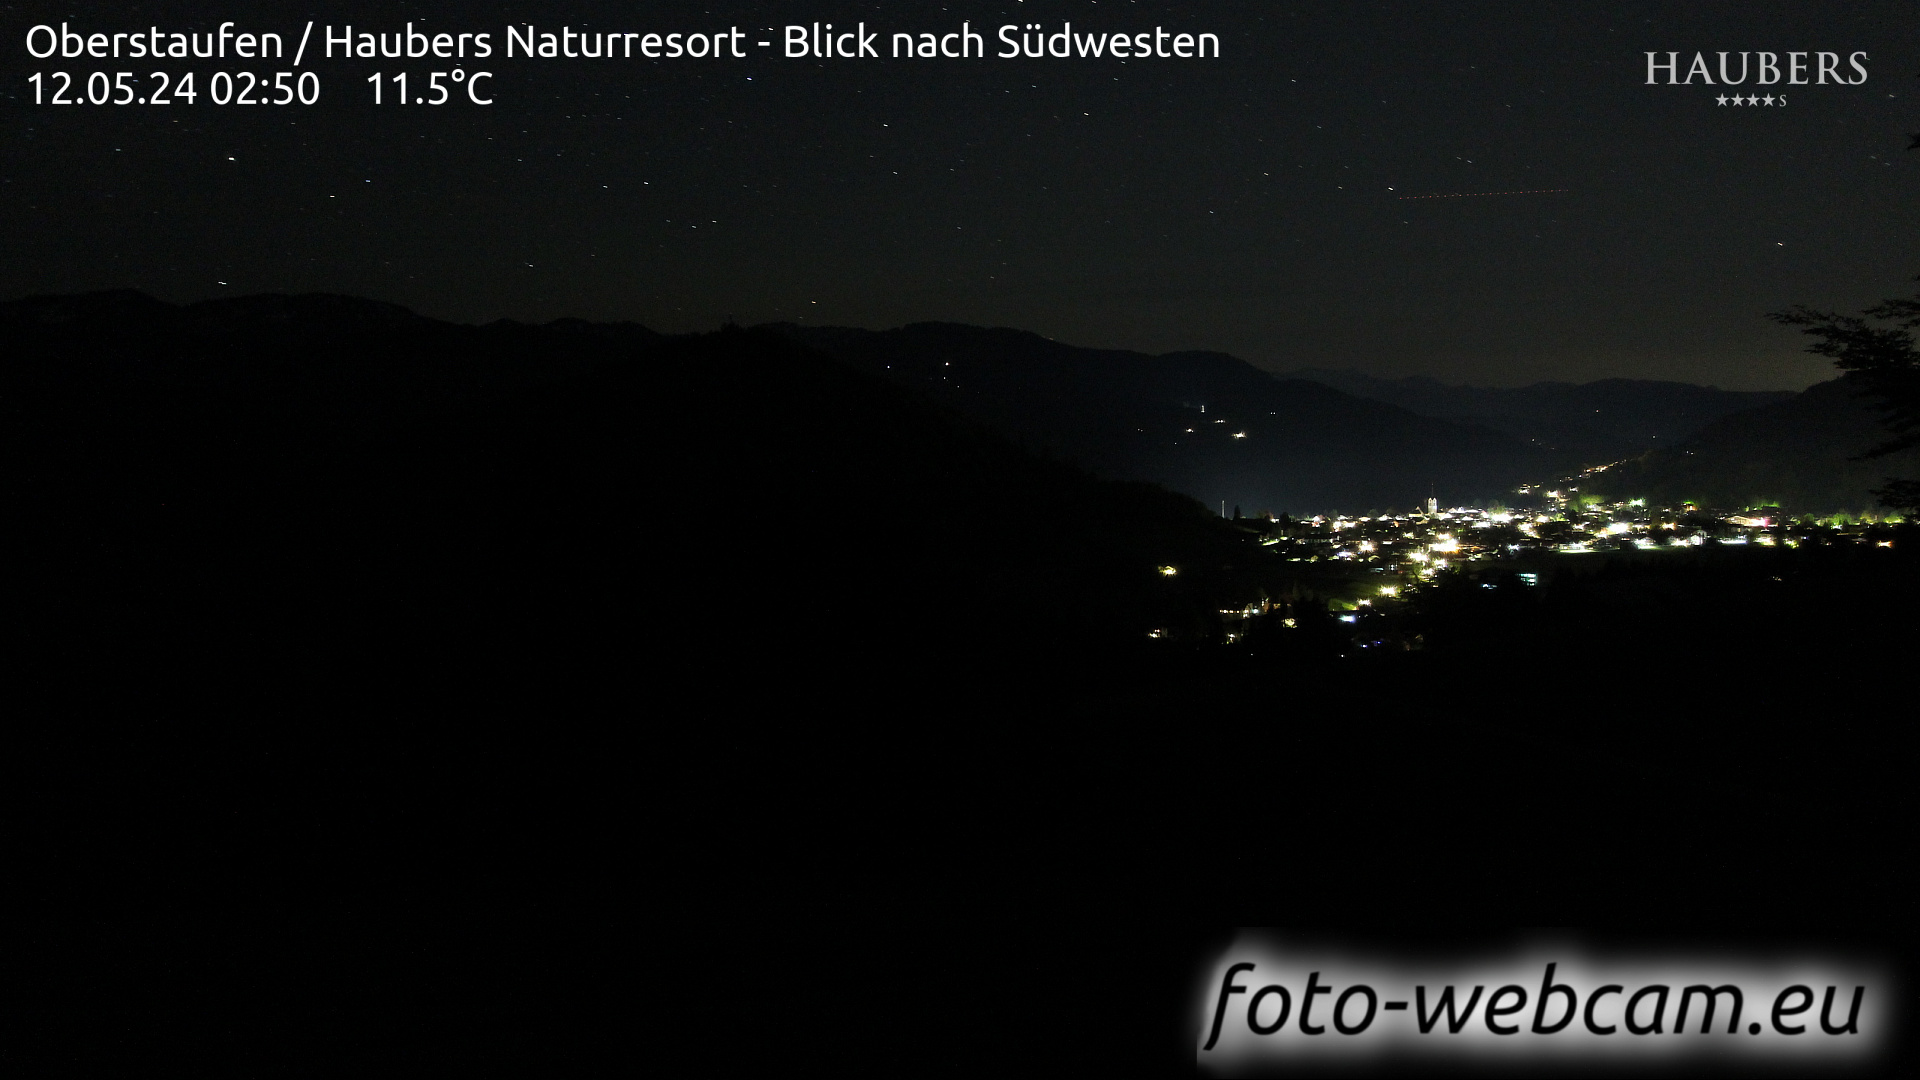 Oberstaufen Thu. 02:54